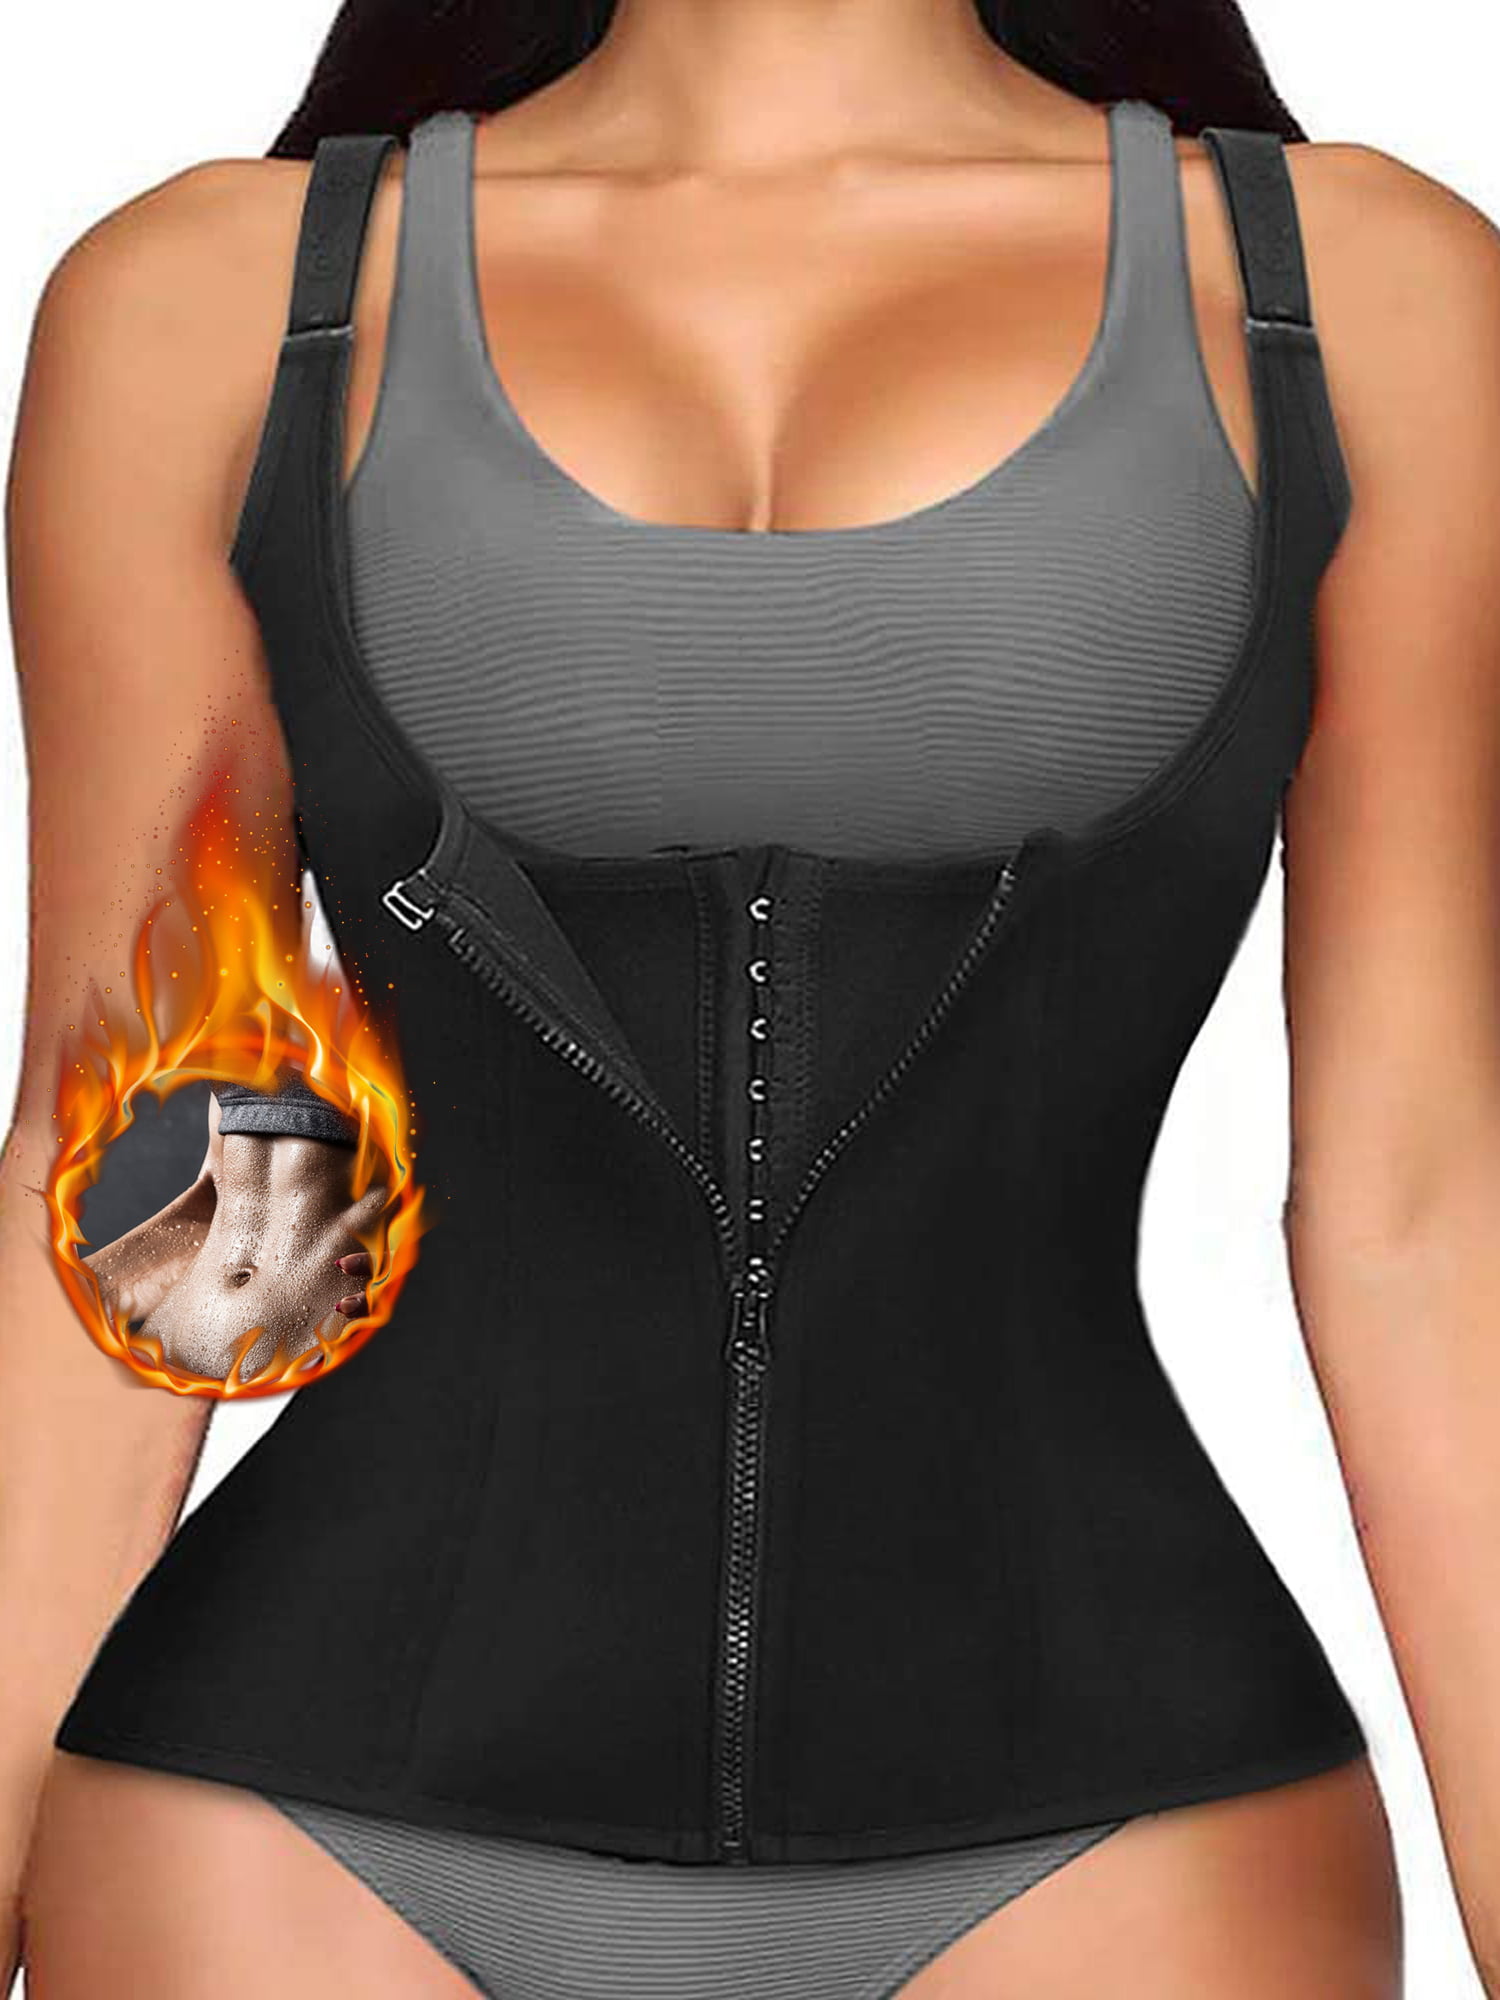 Waist Trainer Vest for Women,Zipper Corset Body Shaper for Tummy Control Neoprene Cincher Tank Top with Straps 